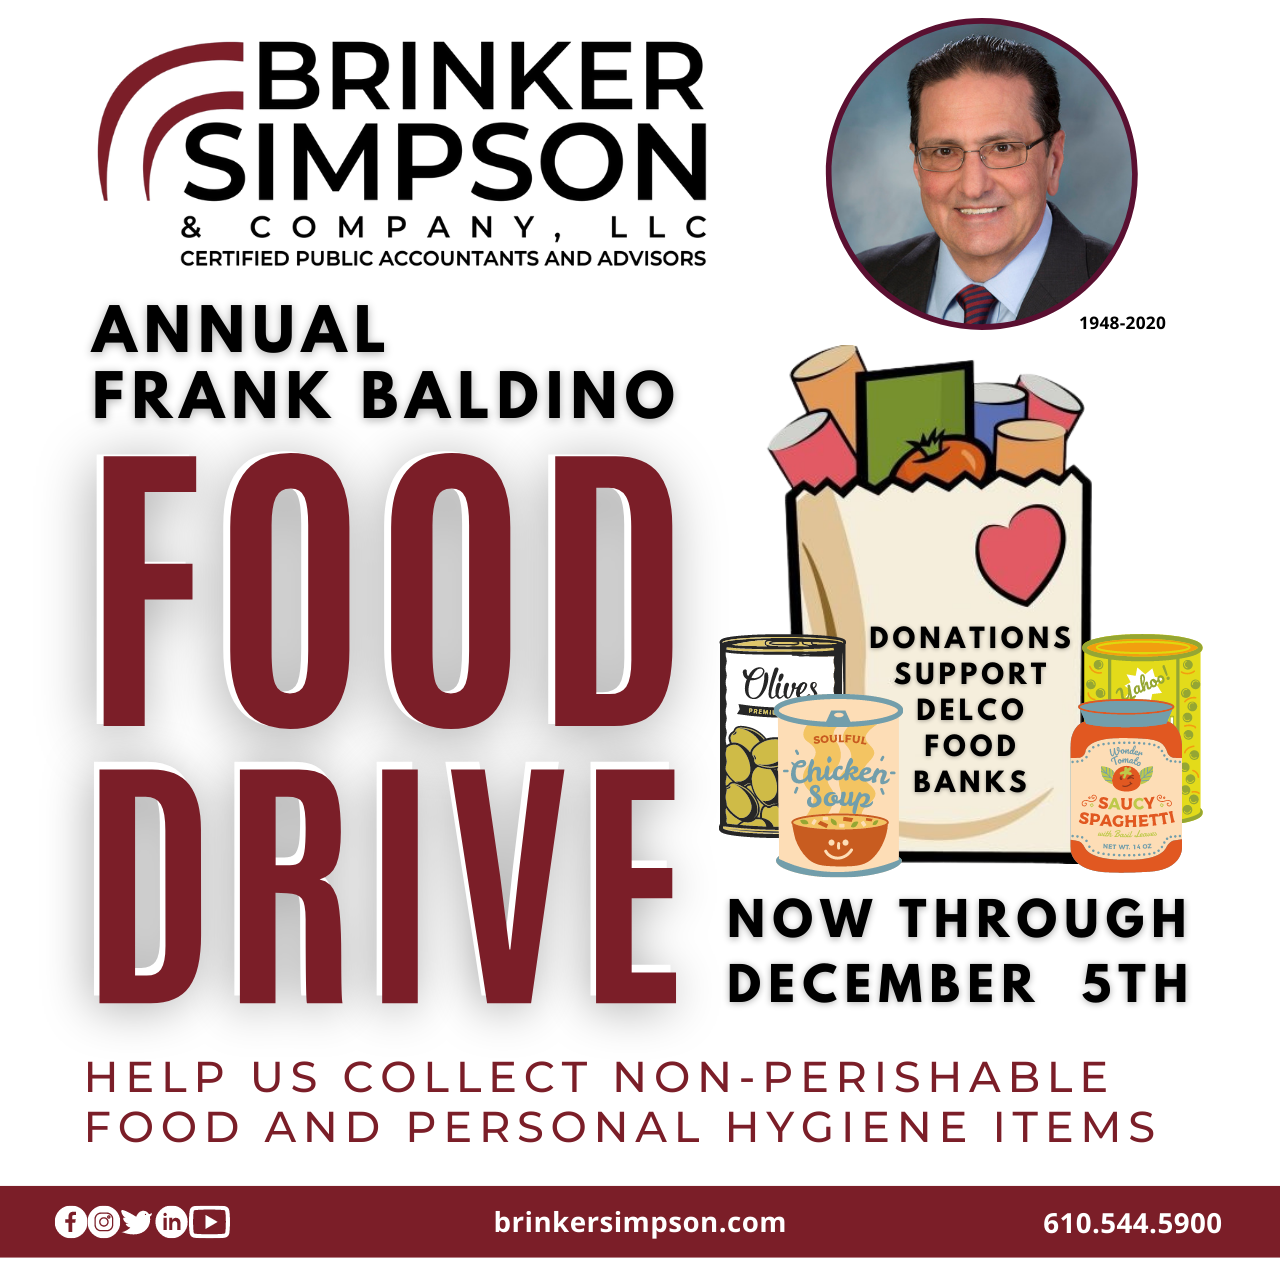 The Brinker Simpson Annual Frank Baldino Food Drive